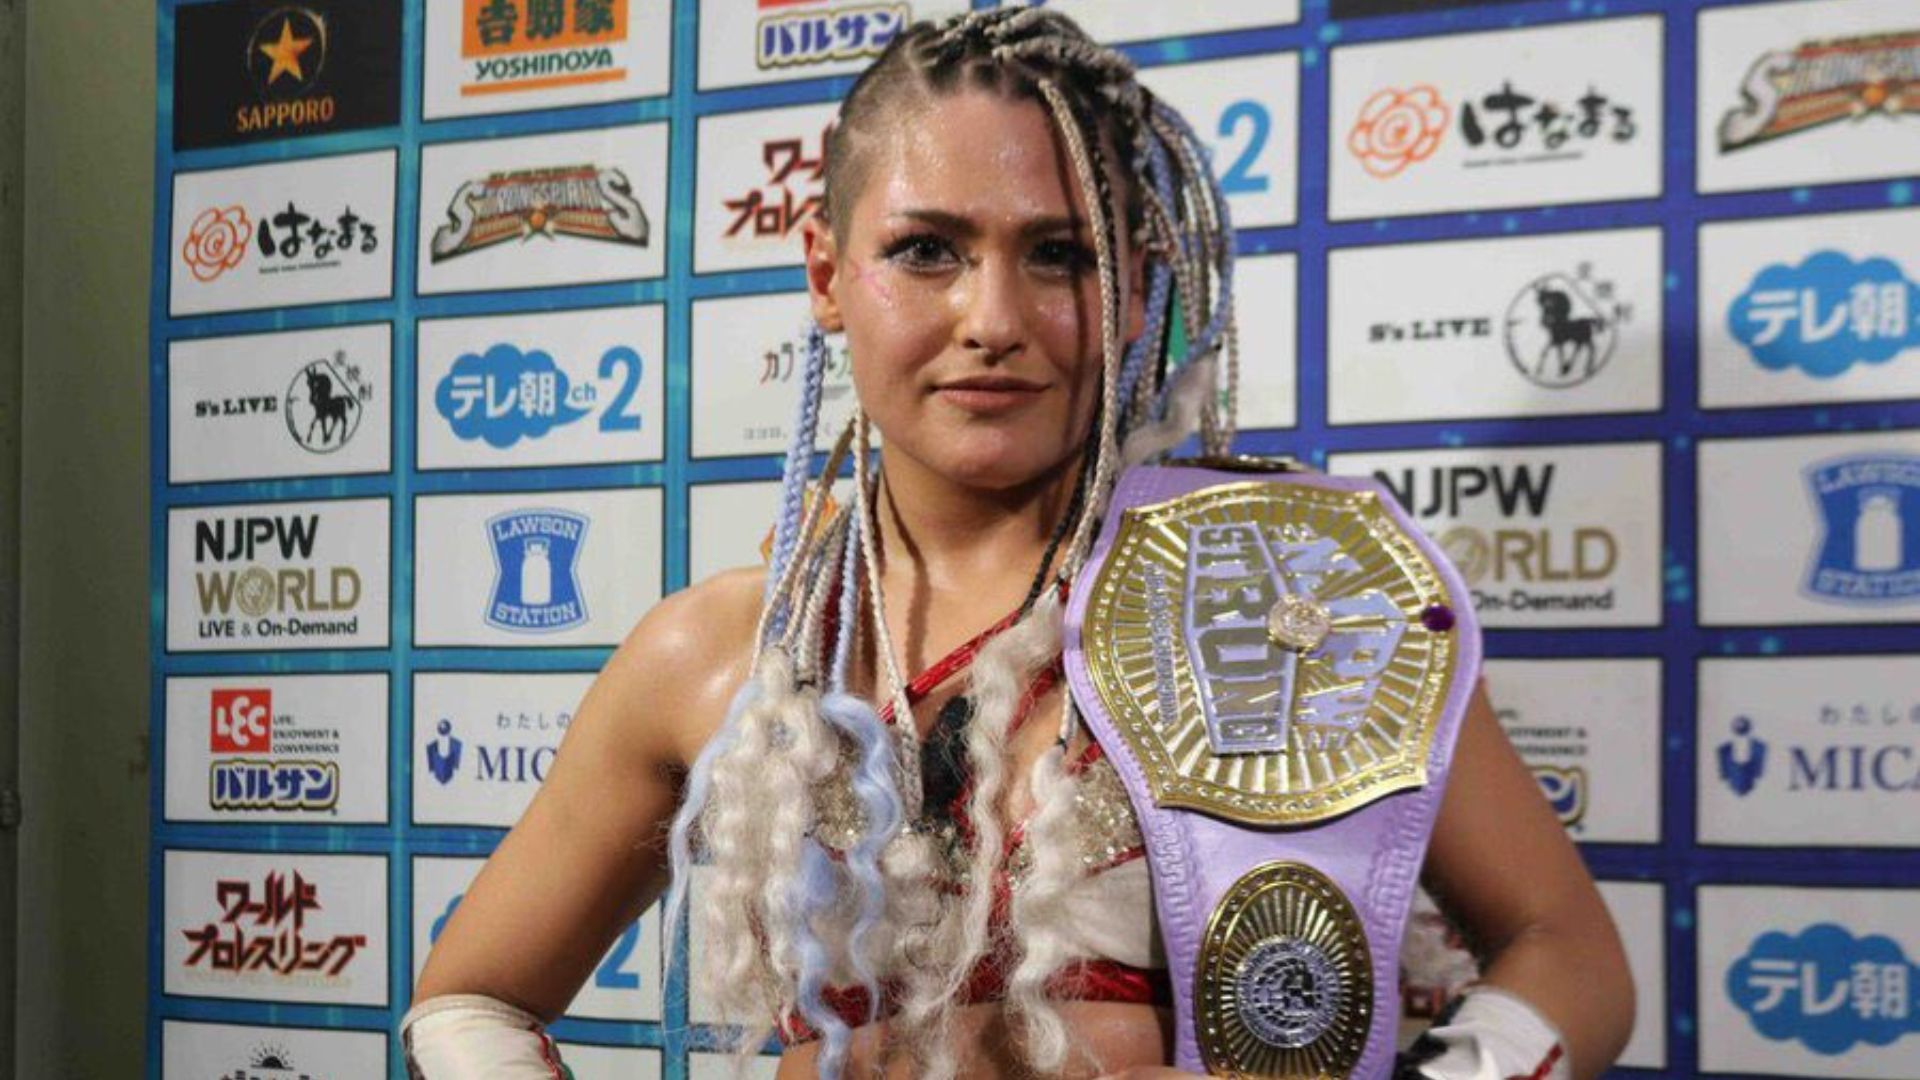 Giulia at NJPW. Image Credits: X